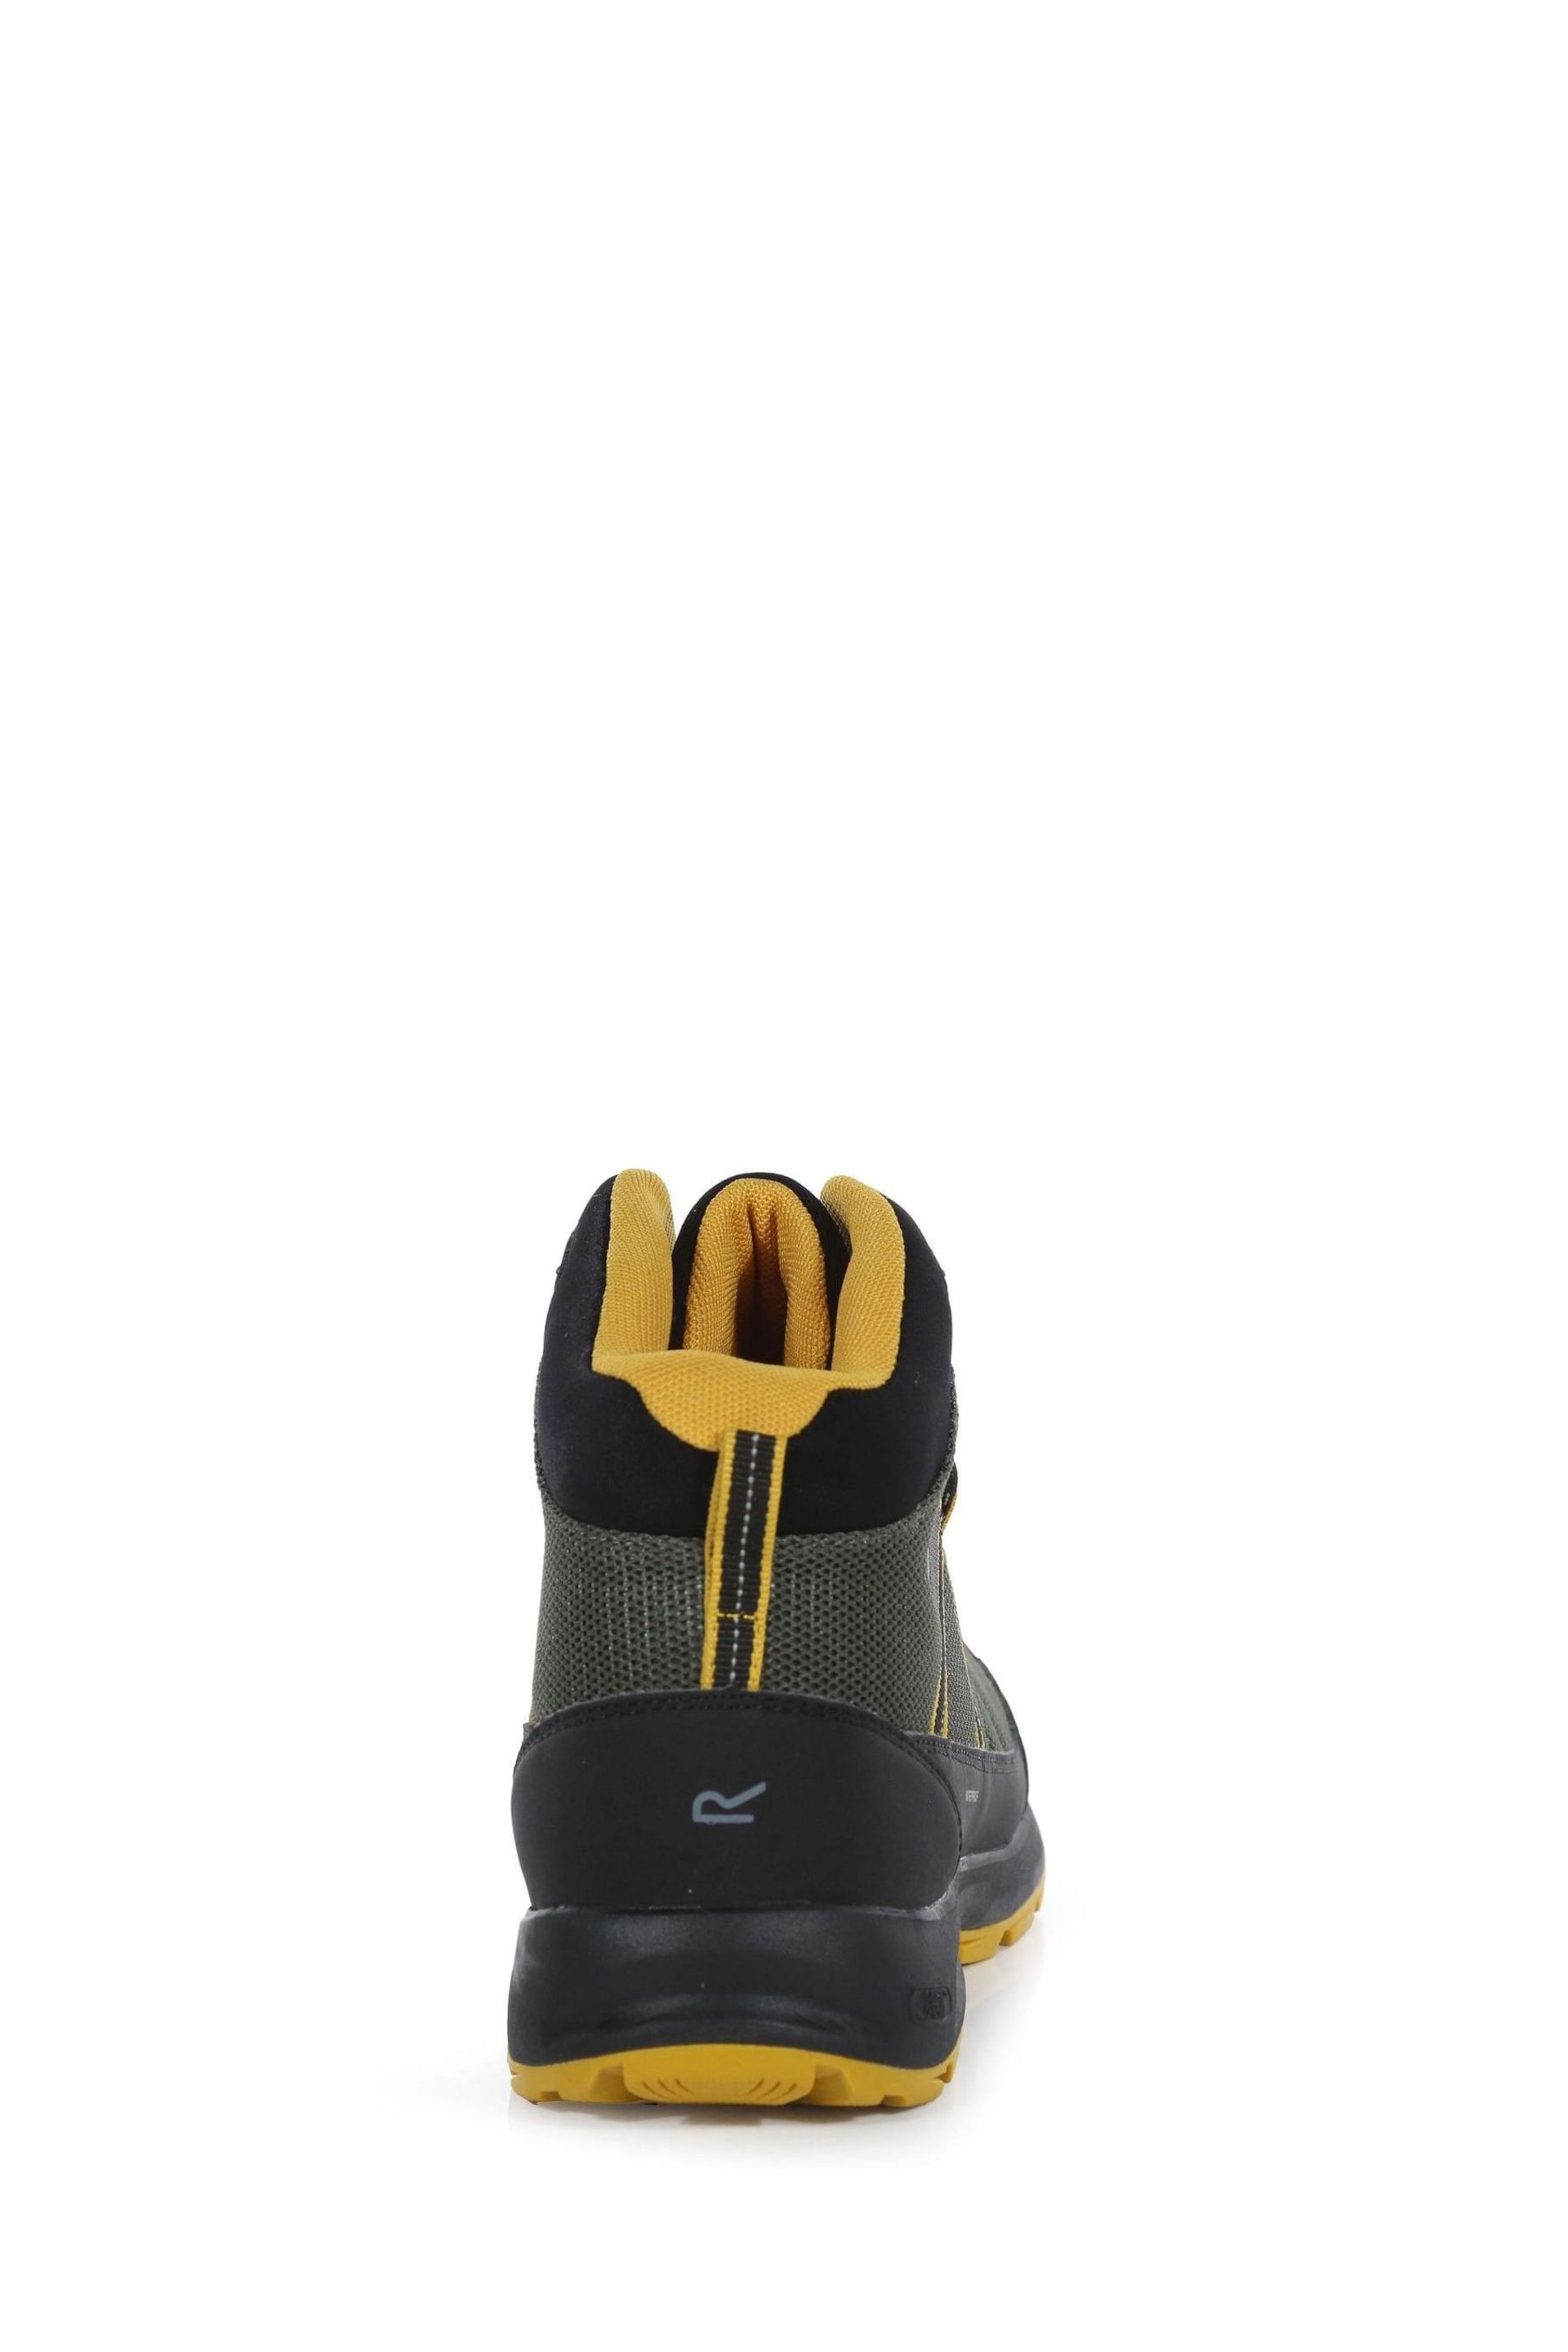 Regatta Green Samaris Lite Mid Walking Boots - Image 4 of 6